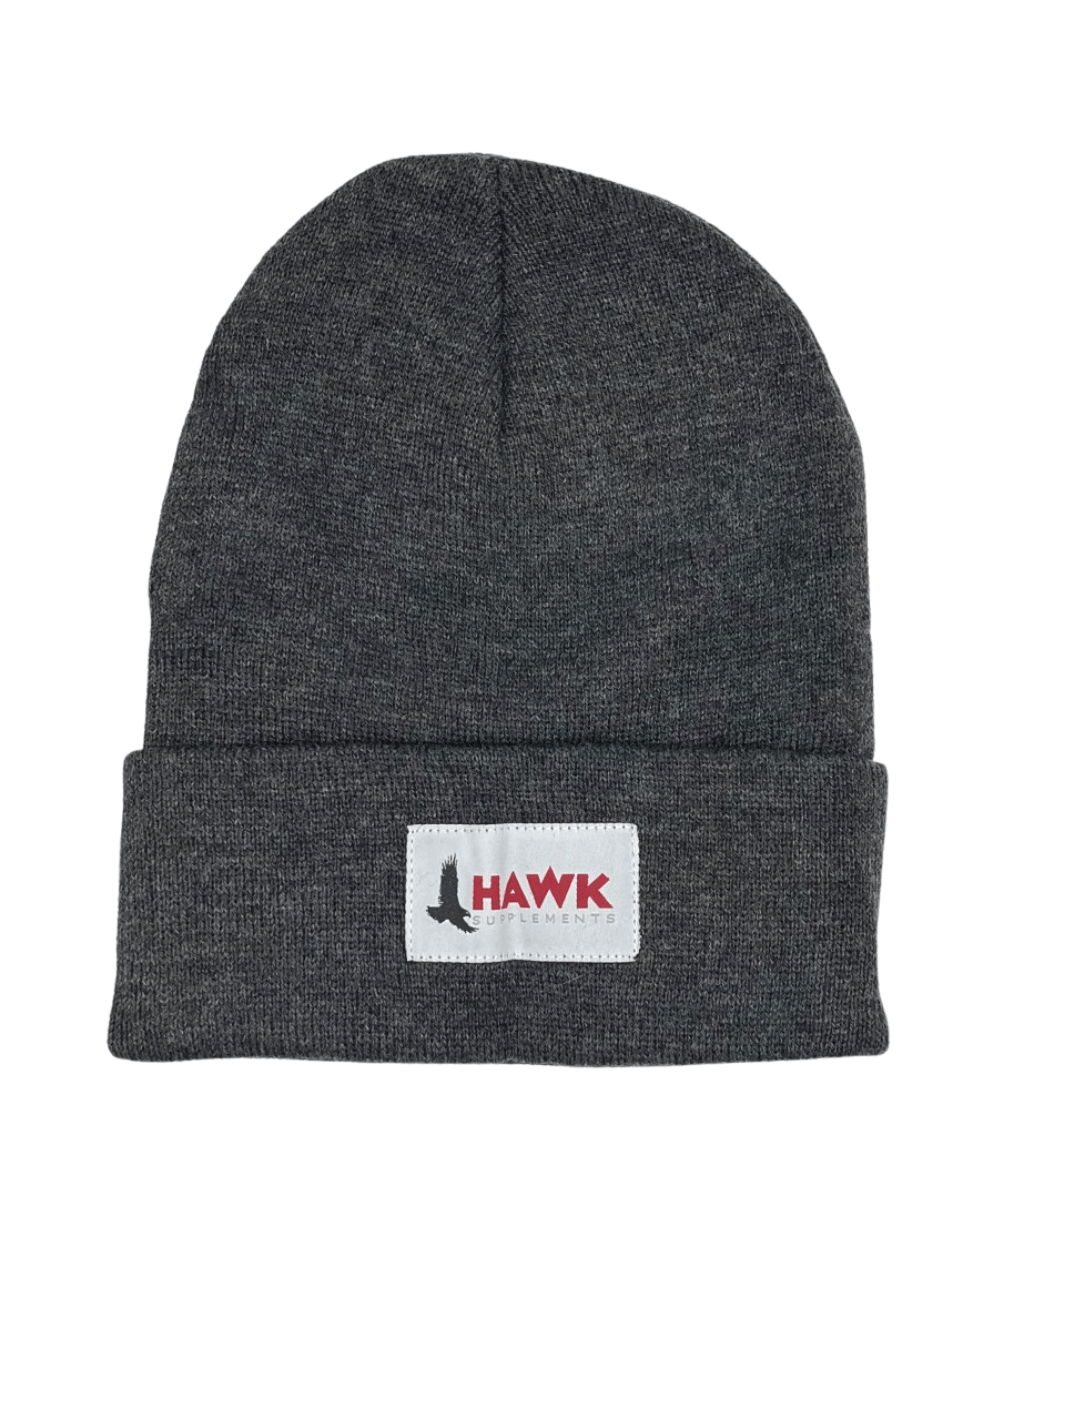 Hawk Supplements Mütze